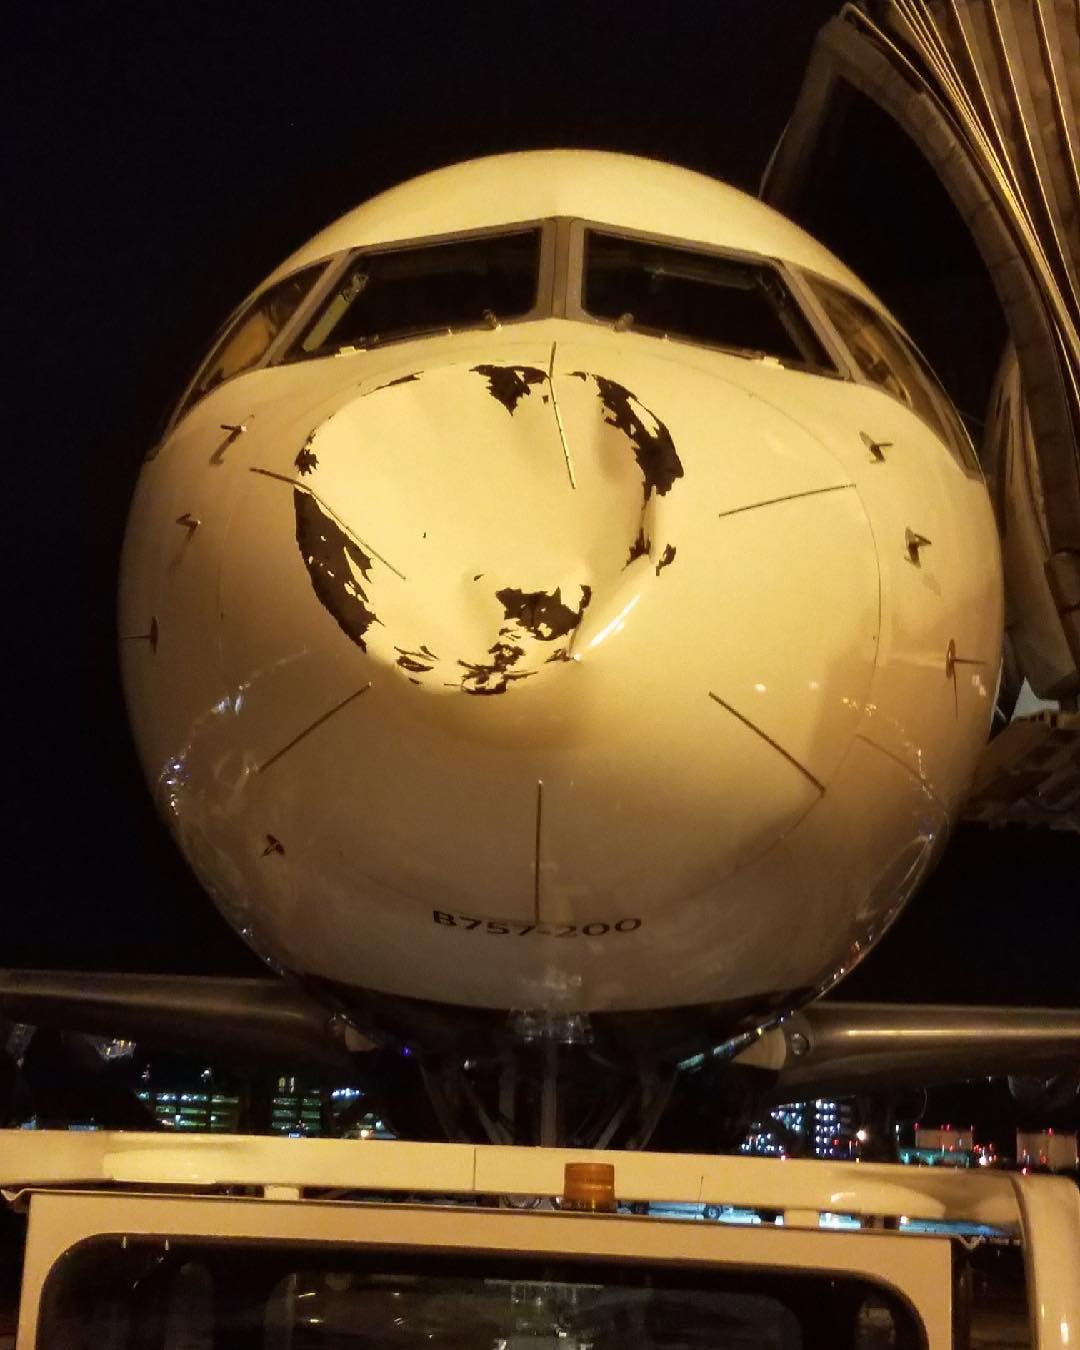 oklahoma city thunder plane nose destroyed